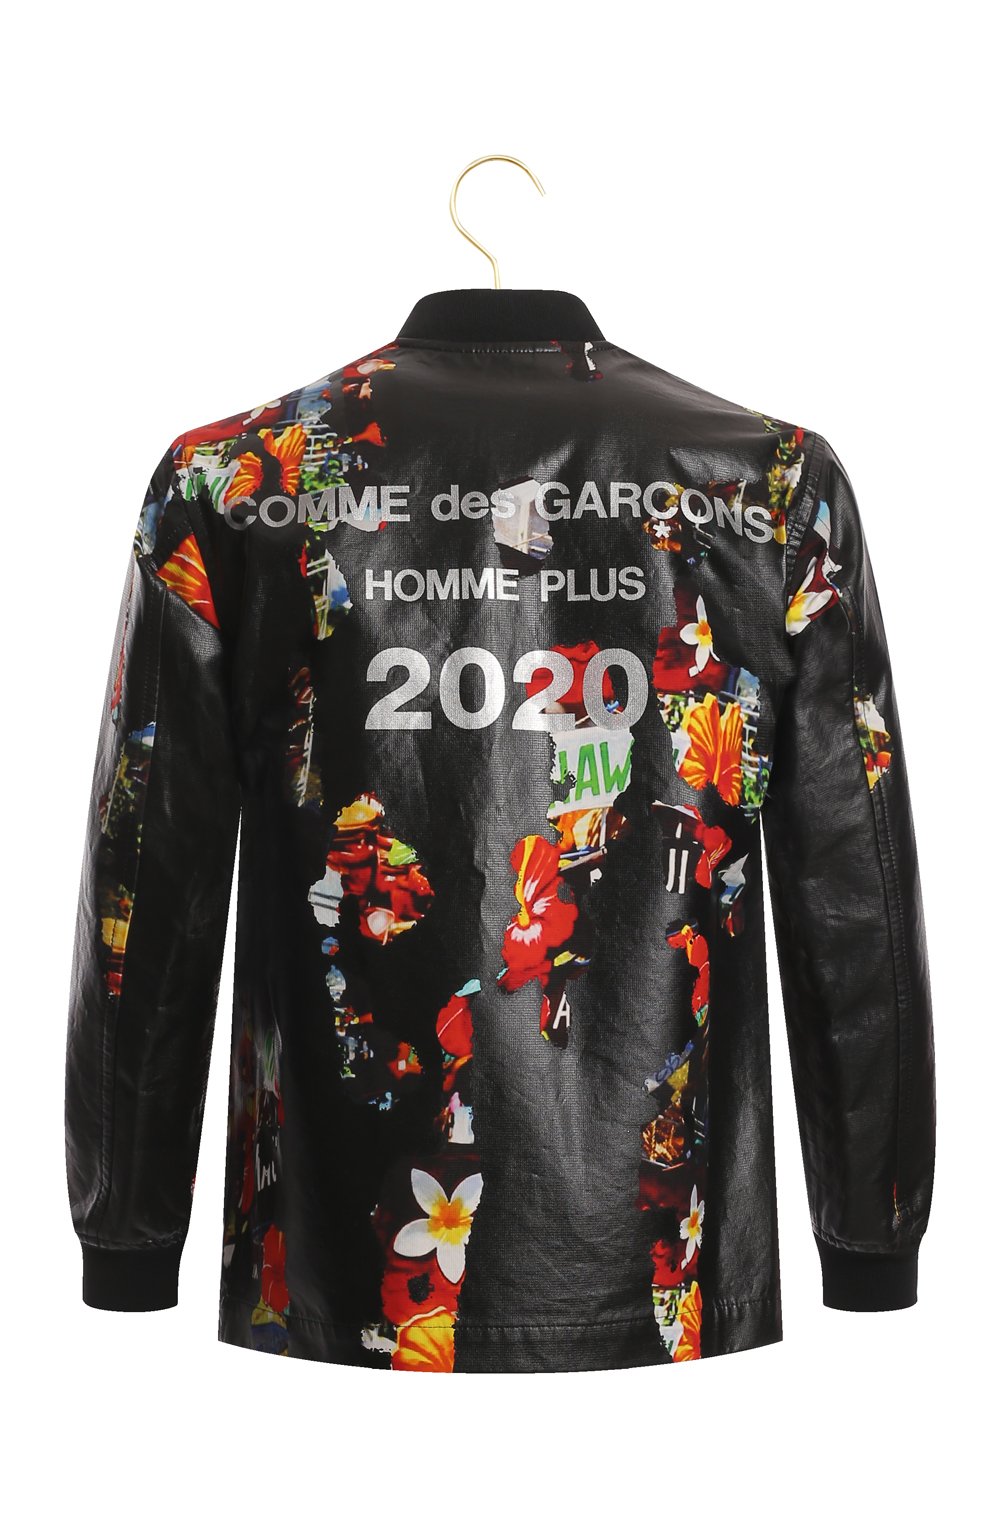 Хлопковая куртка | Comme Des Garcons Homme Plus | Чёрный - 2